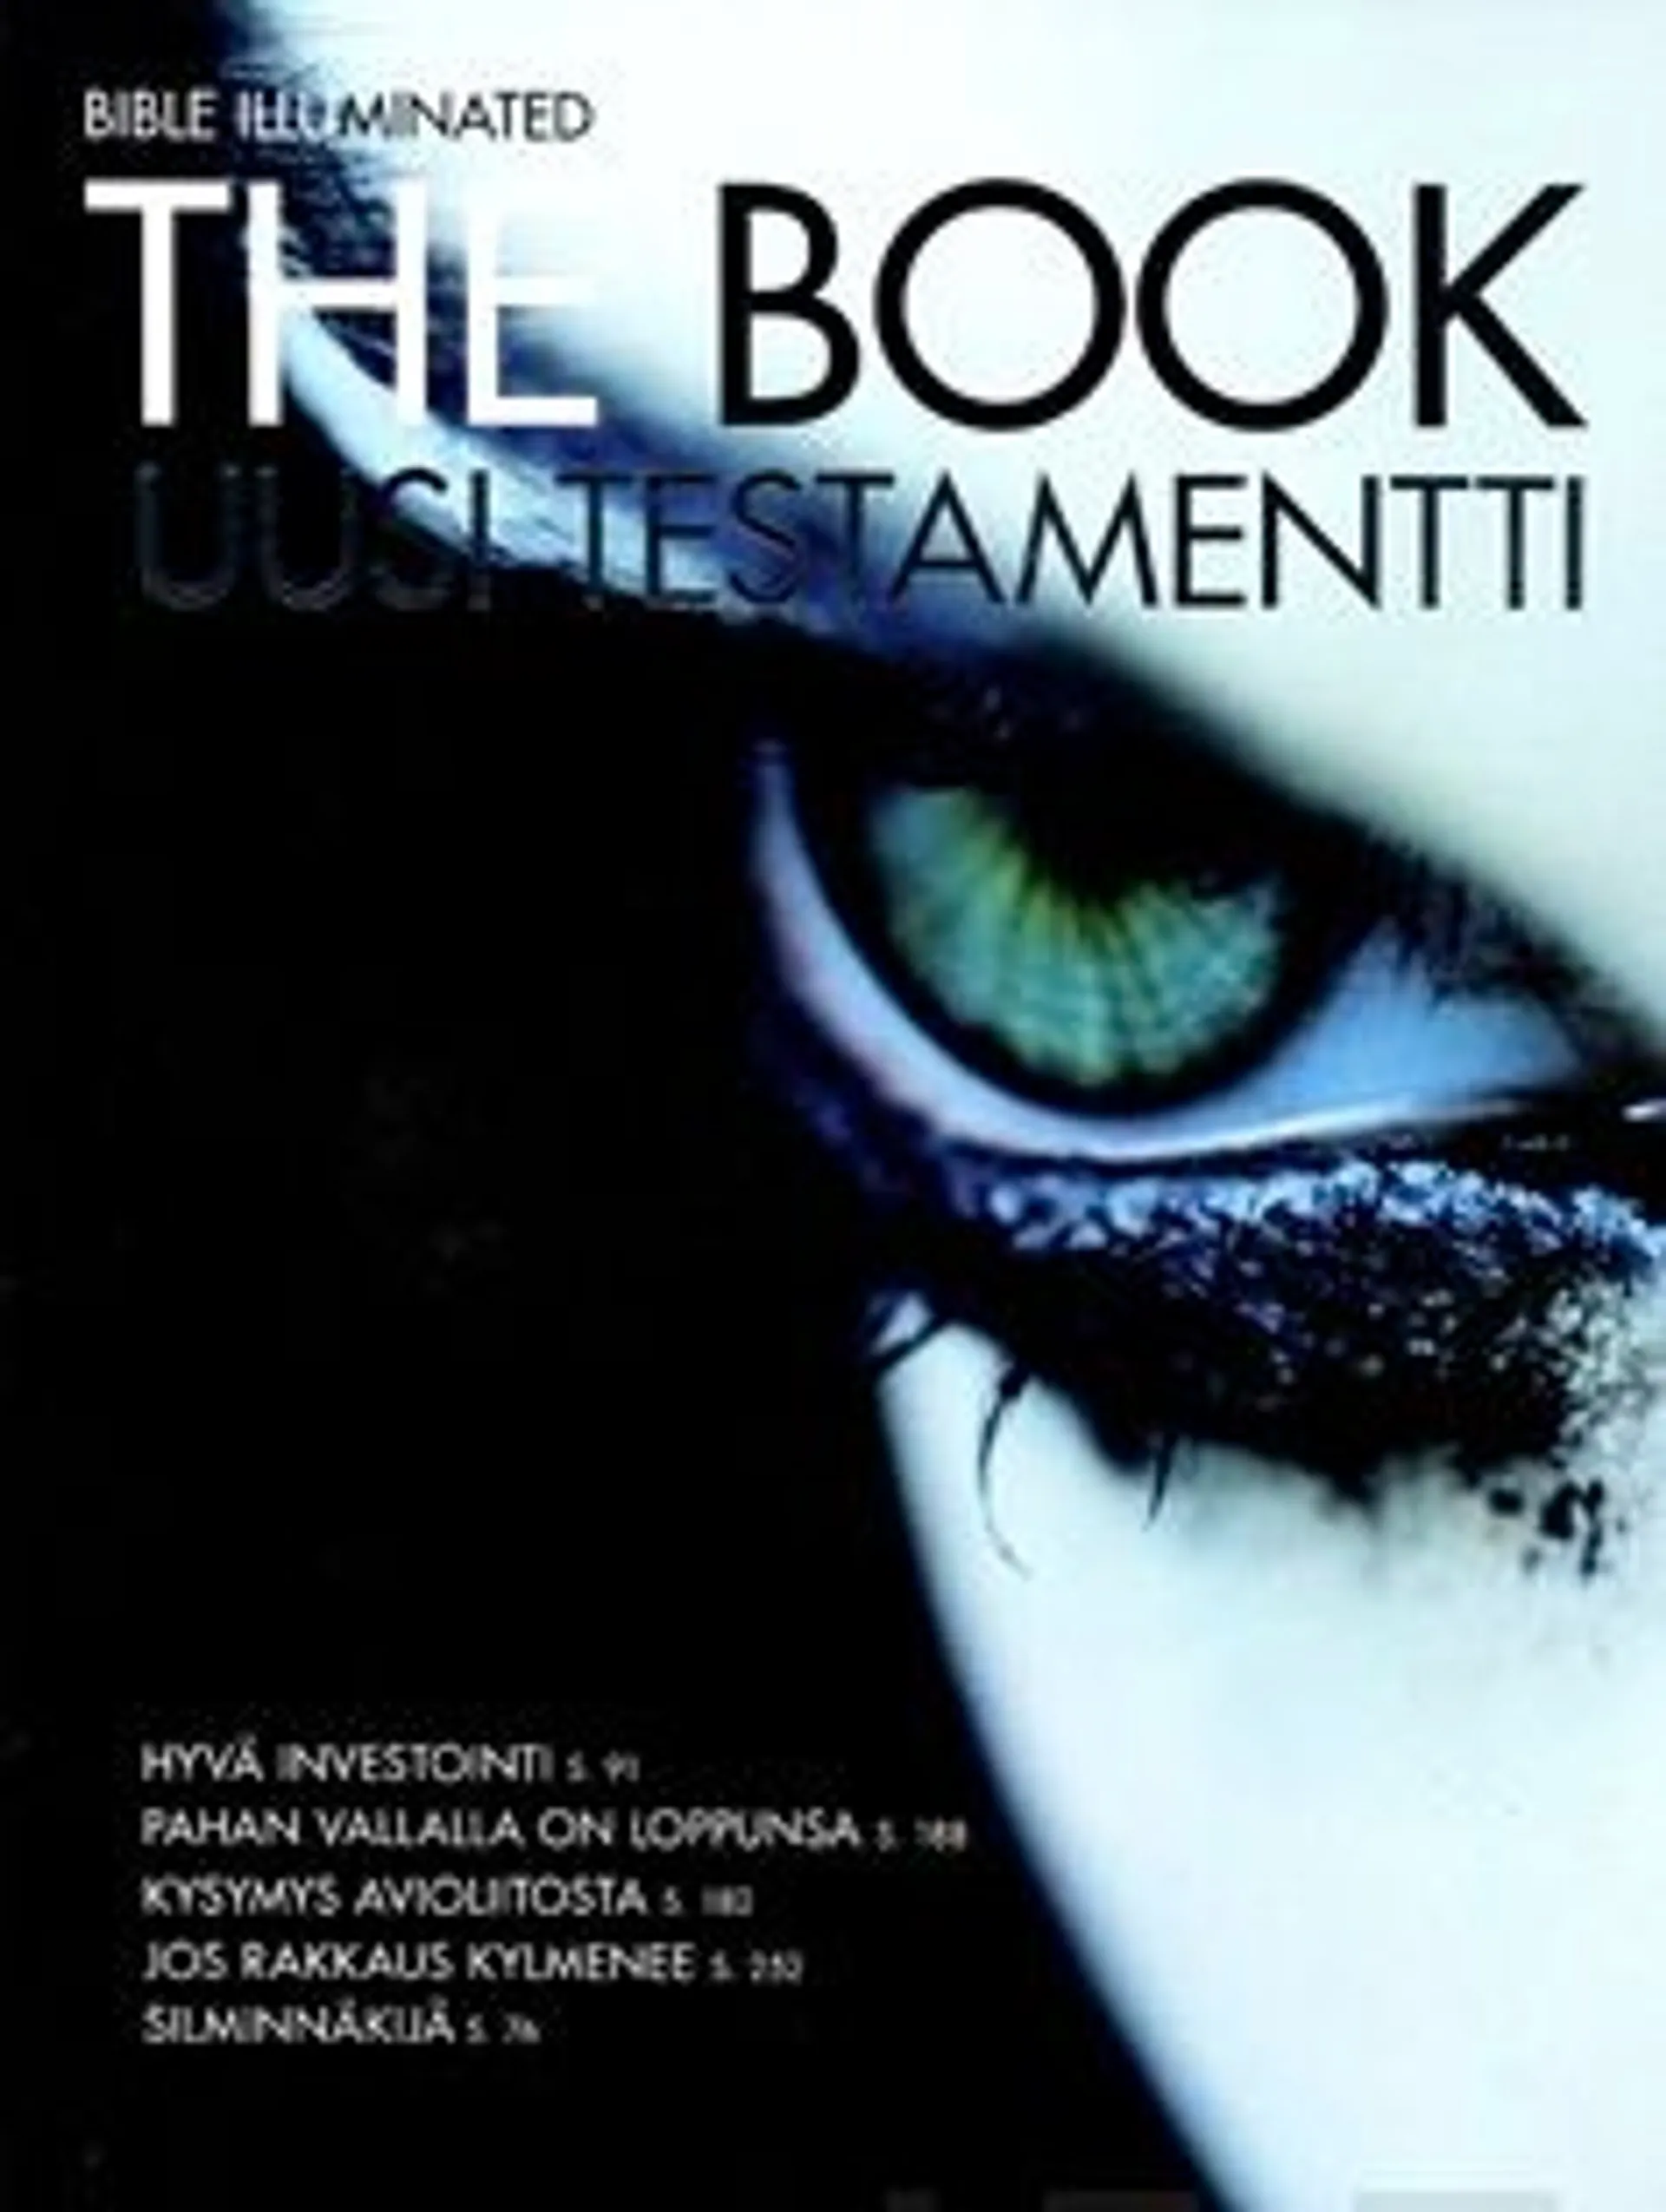 Uusi testamentti - The Book